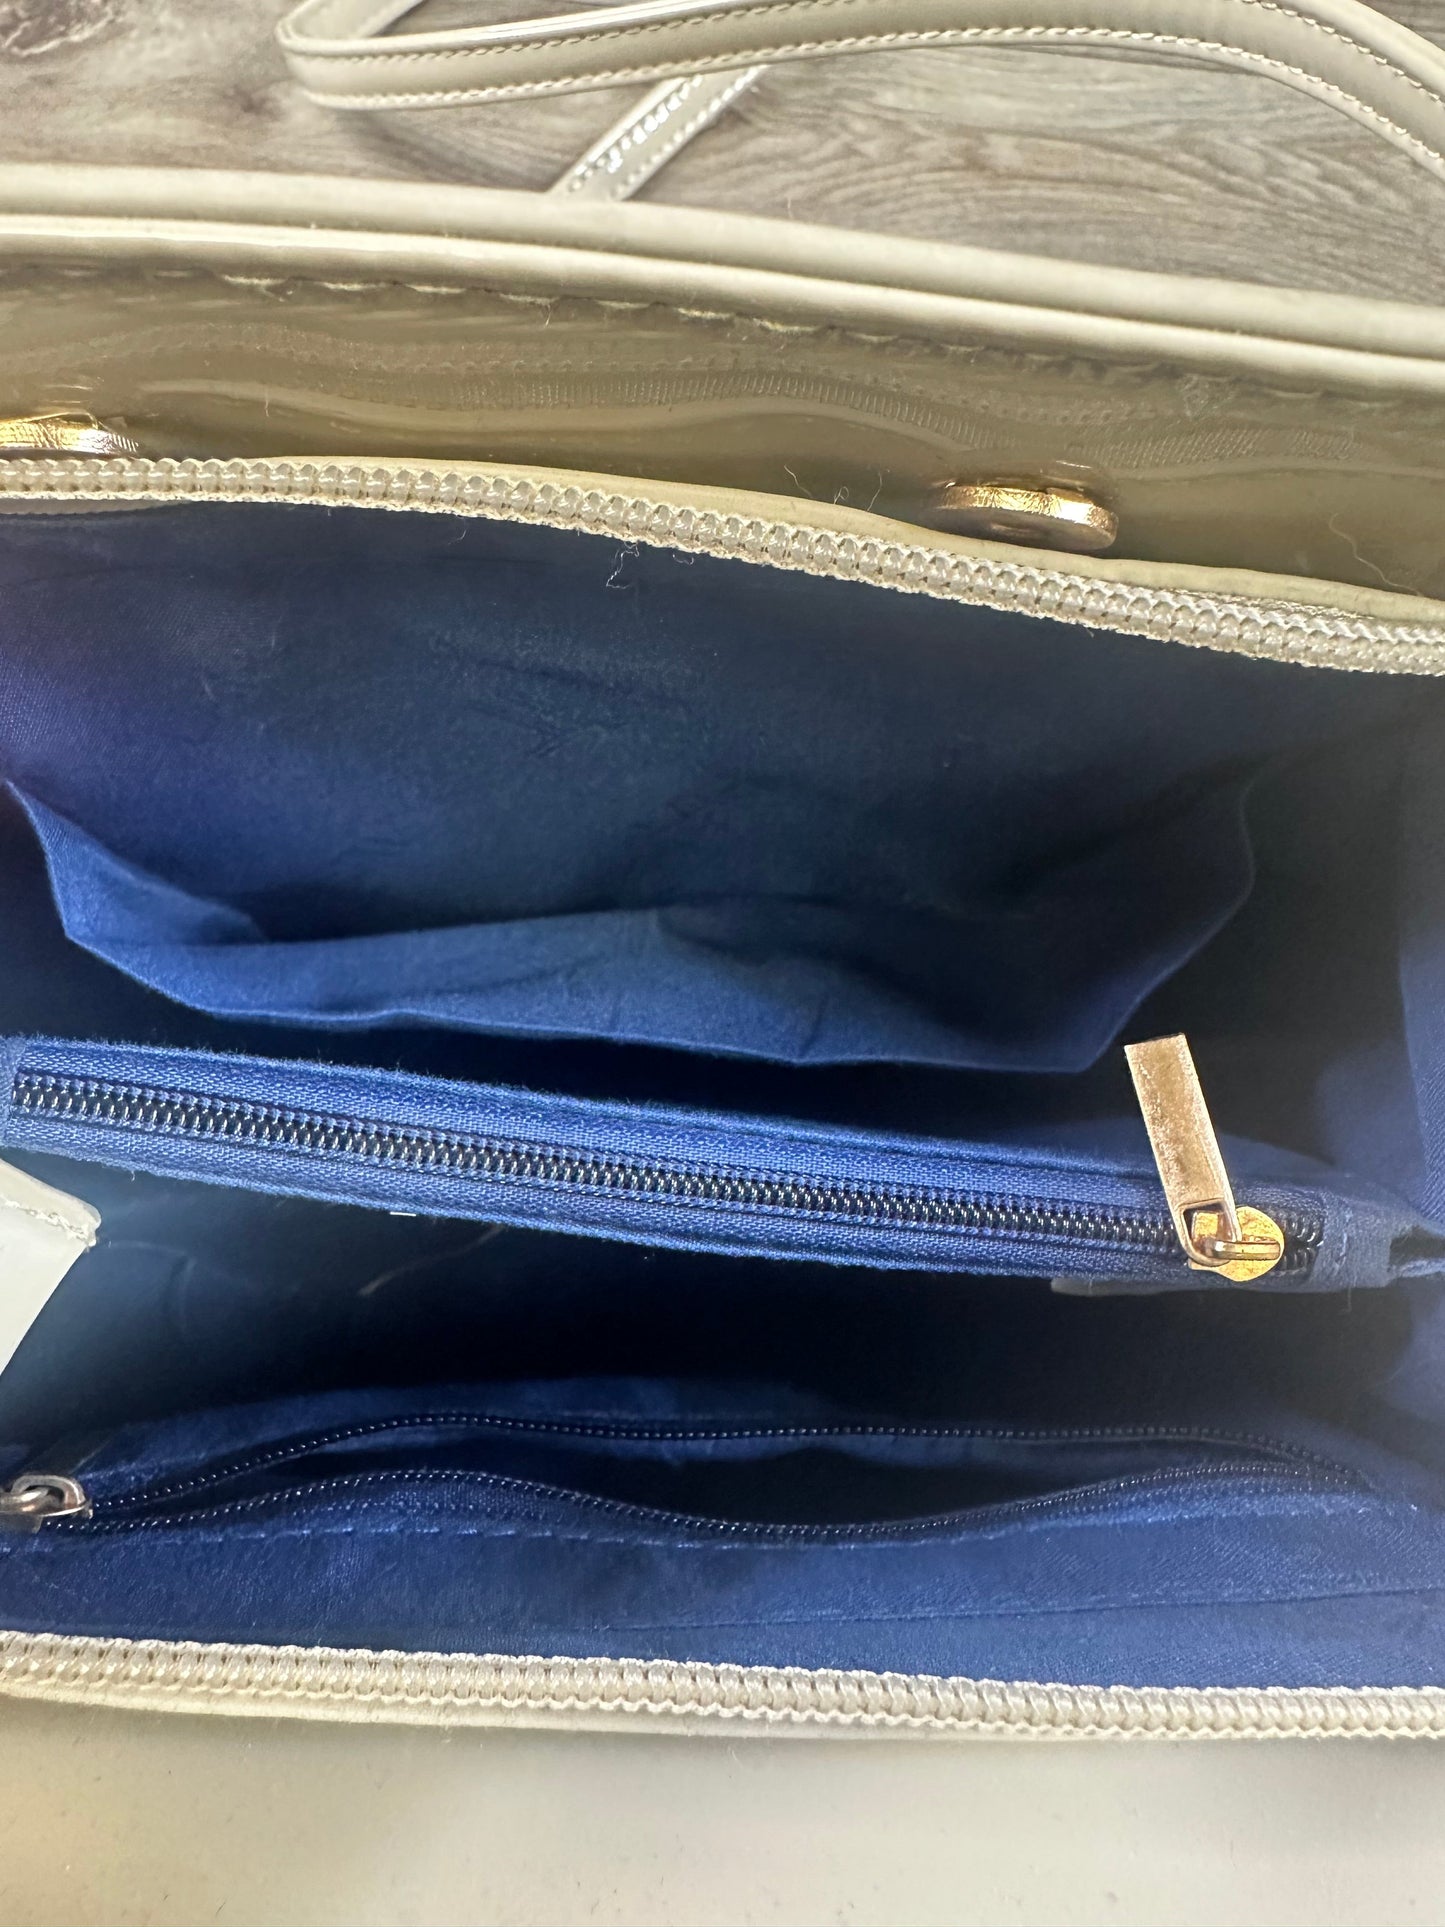 Handbag Clothes Mentor, Size Medium